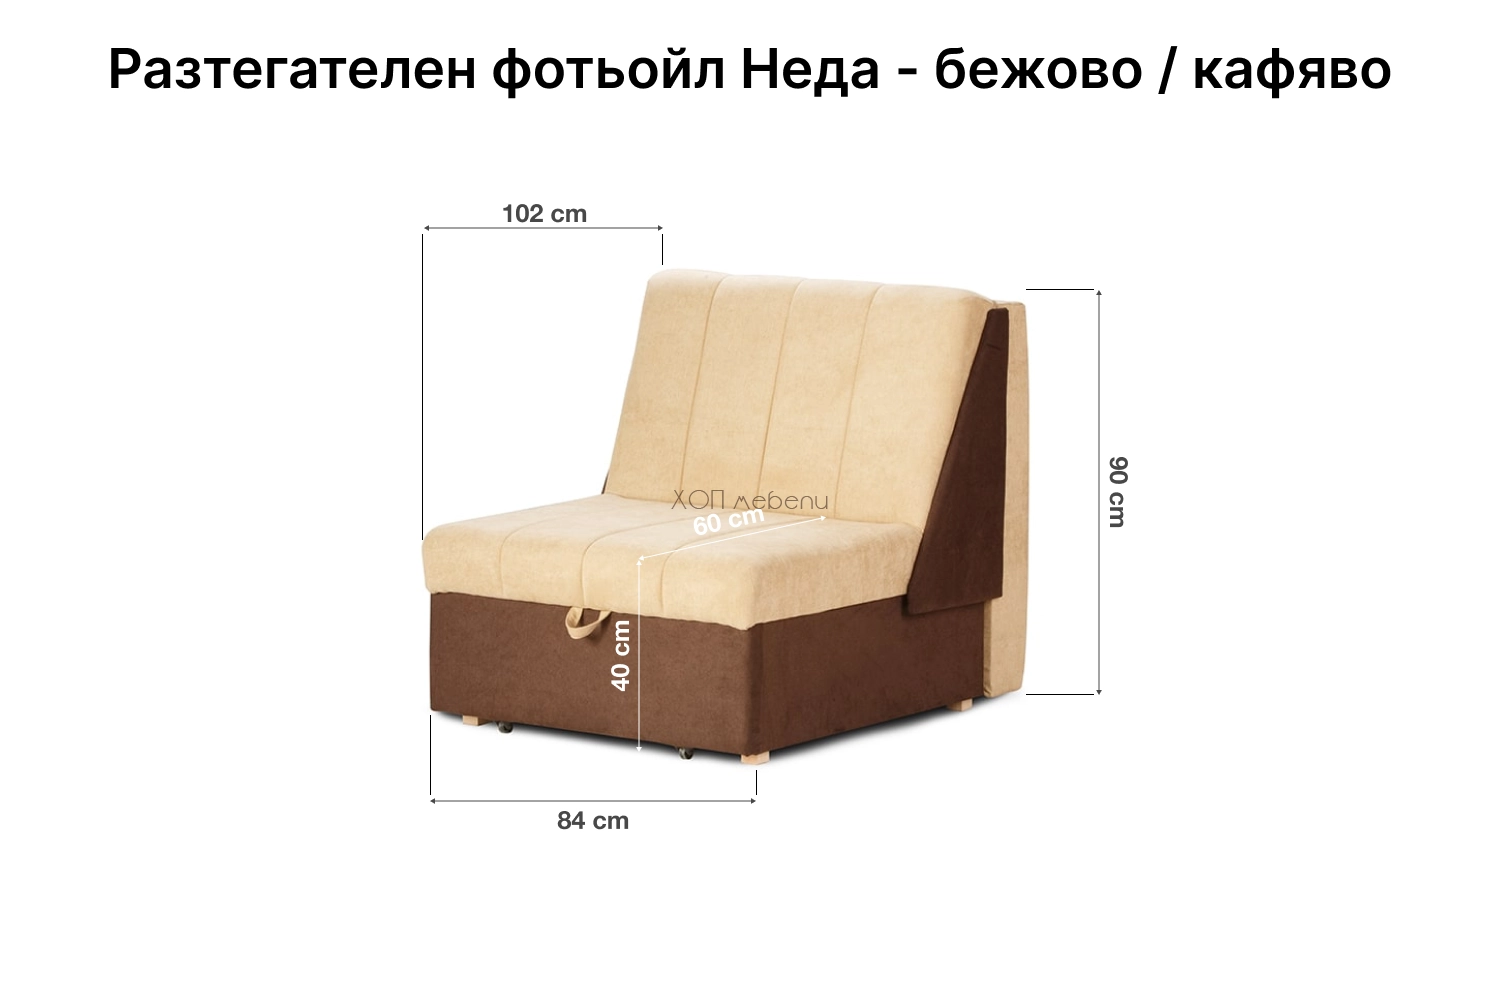 Размери на Разтегателен фотьойл Неда - бежово / кафяво ID 10000 - 1